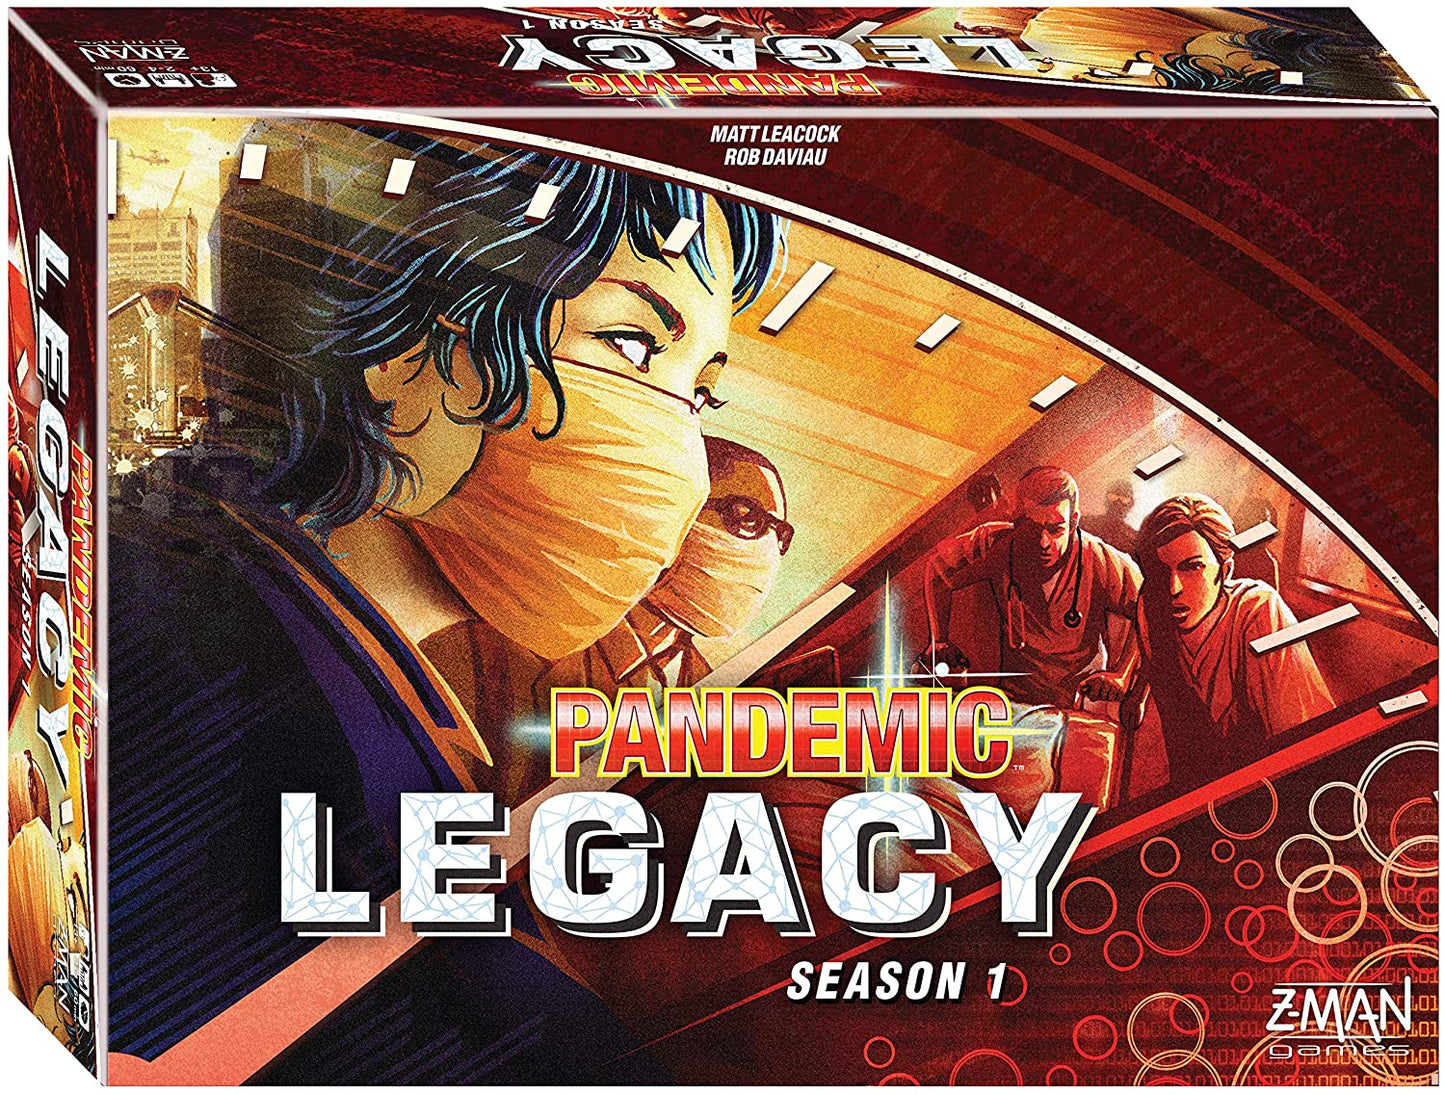 Pandemic: Legacy Season 1 Red Ed.